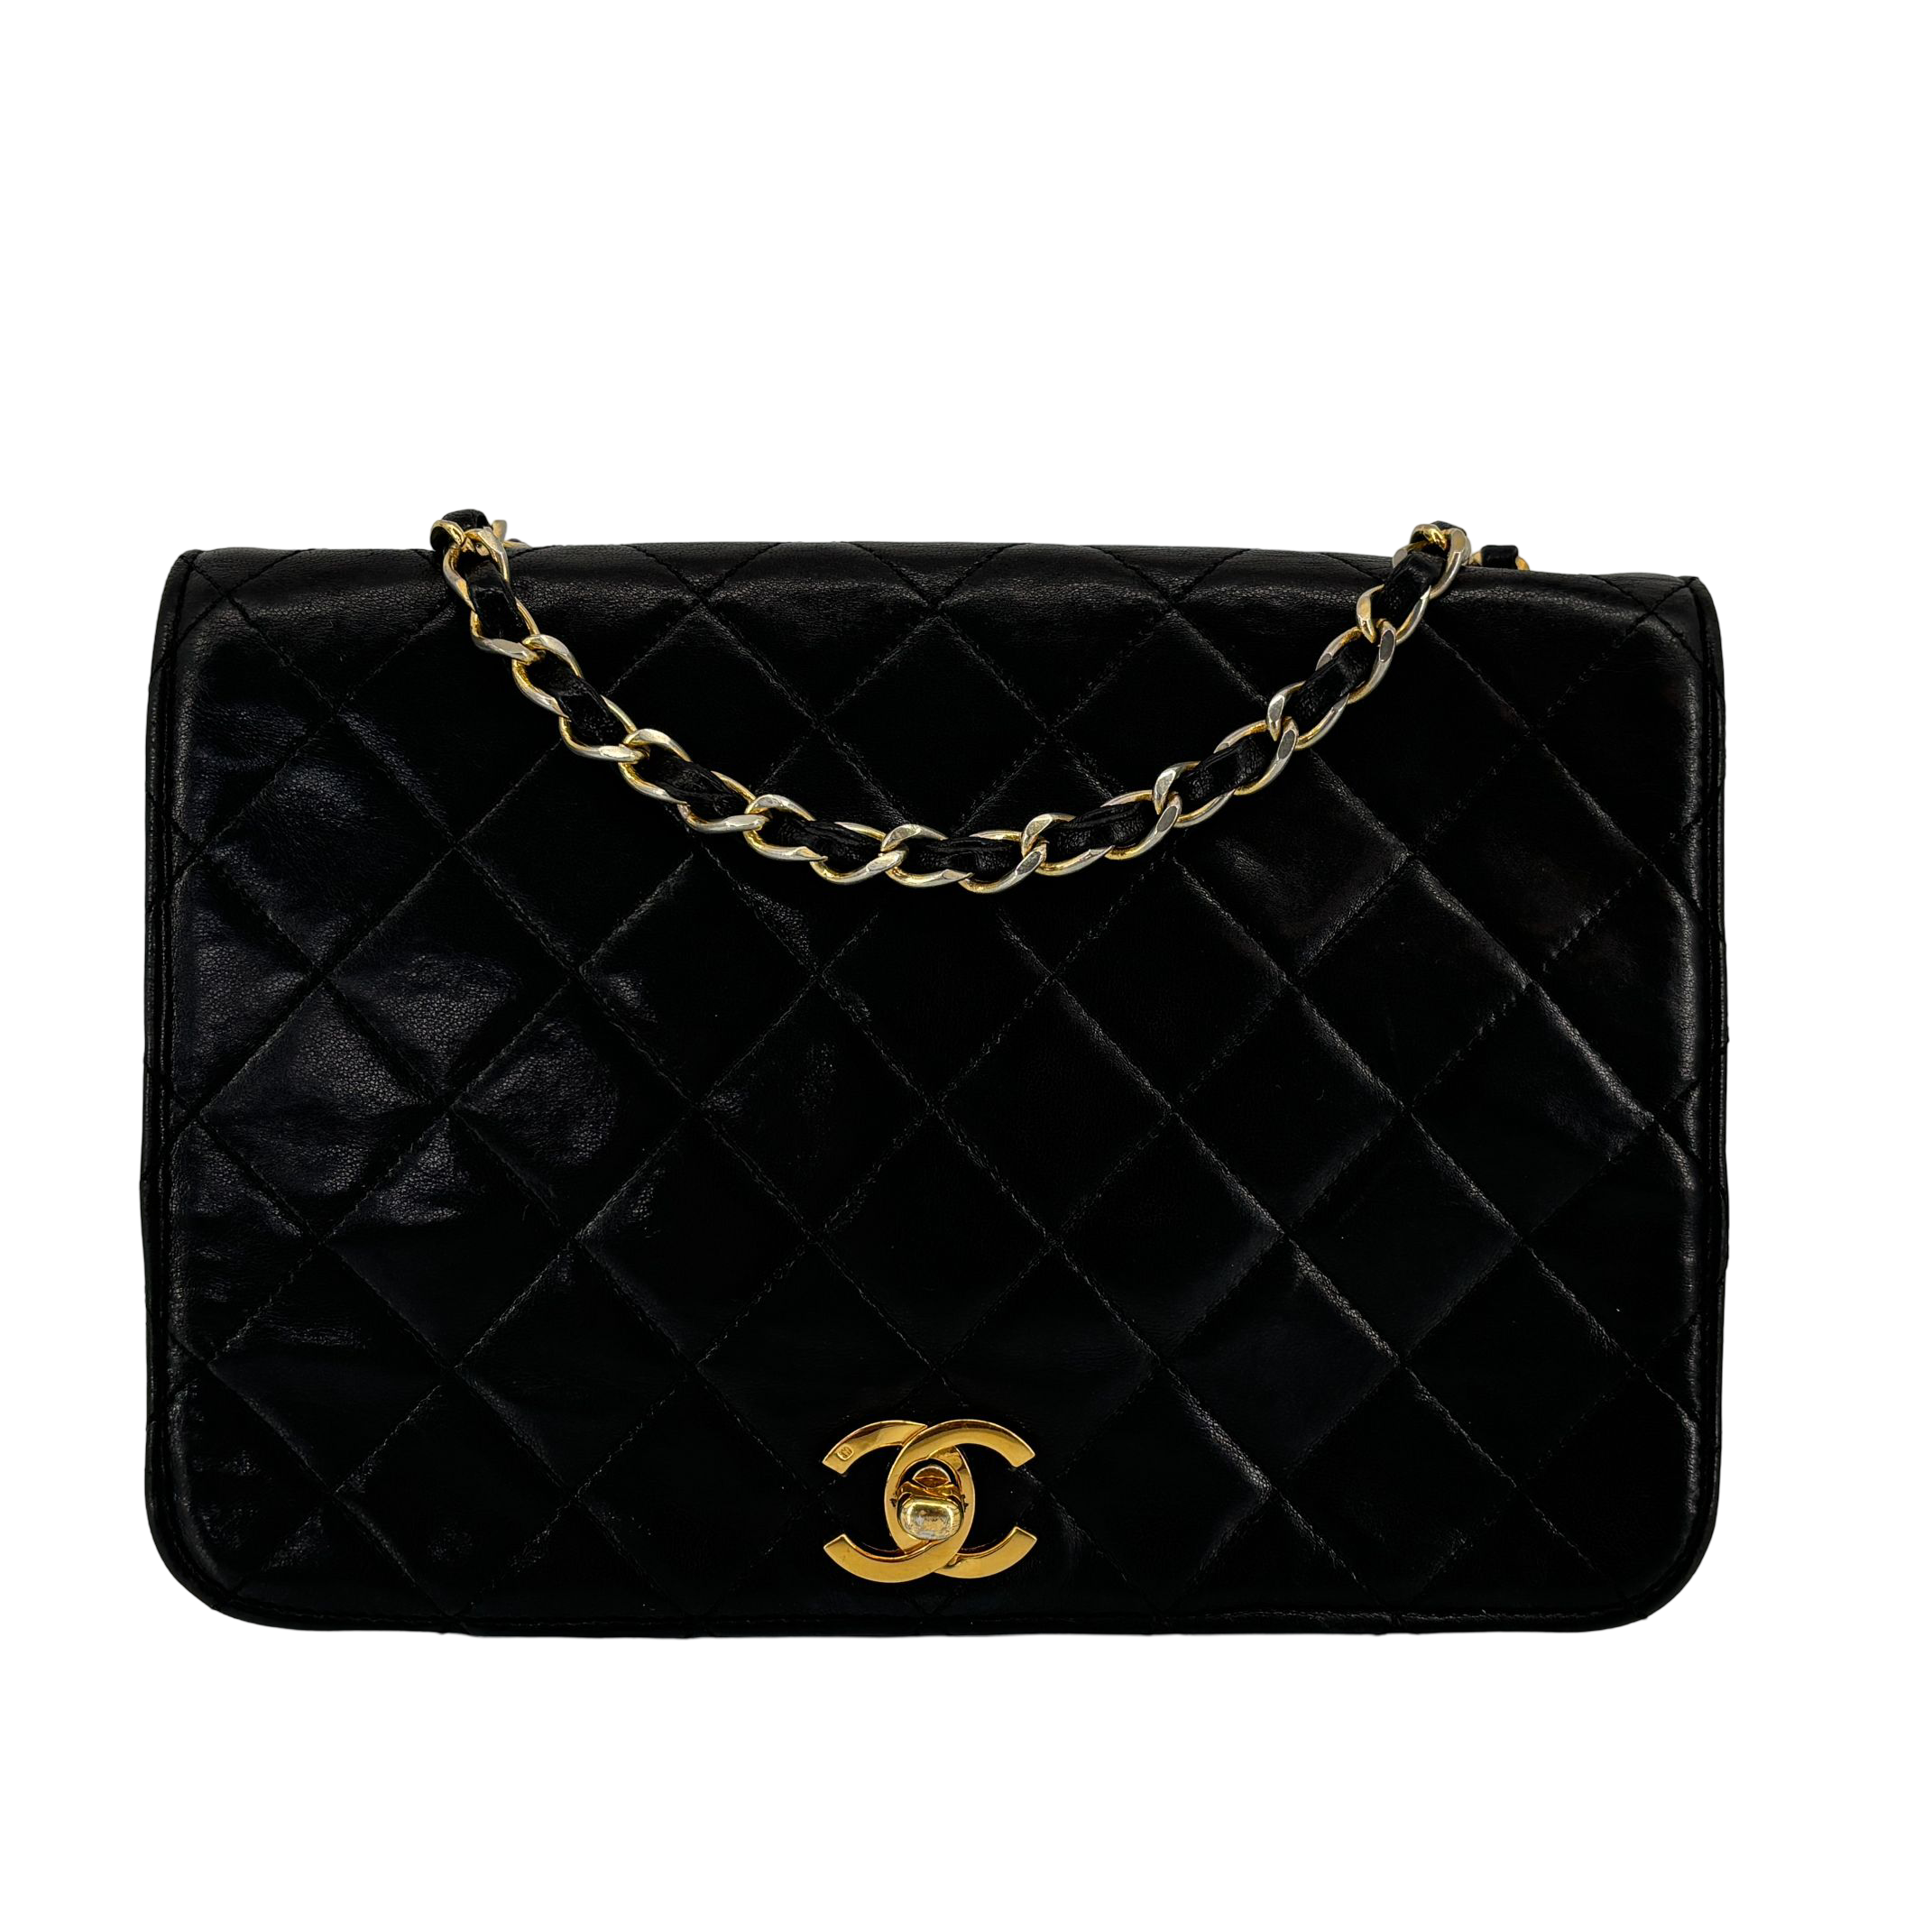 Chanel Full Flap Bag Turn-Lock Black Matelassé Leather